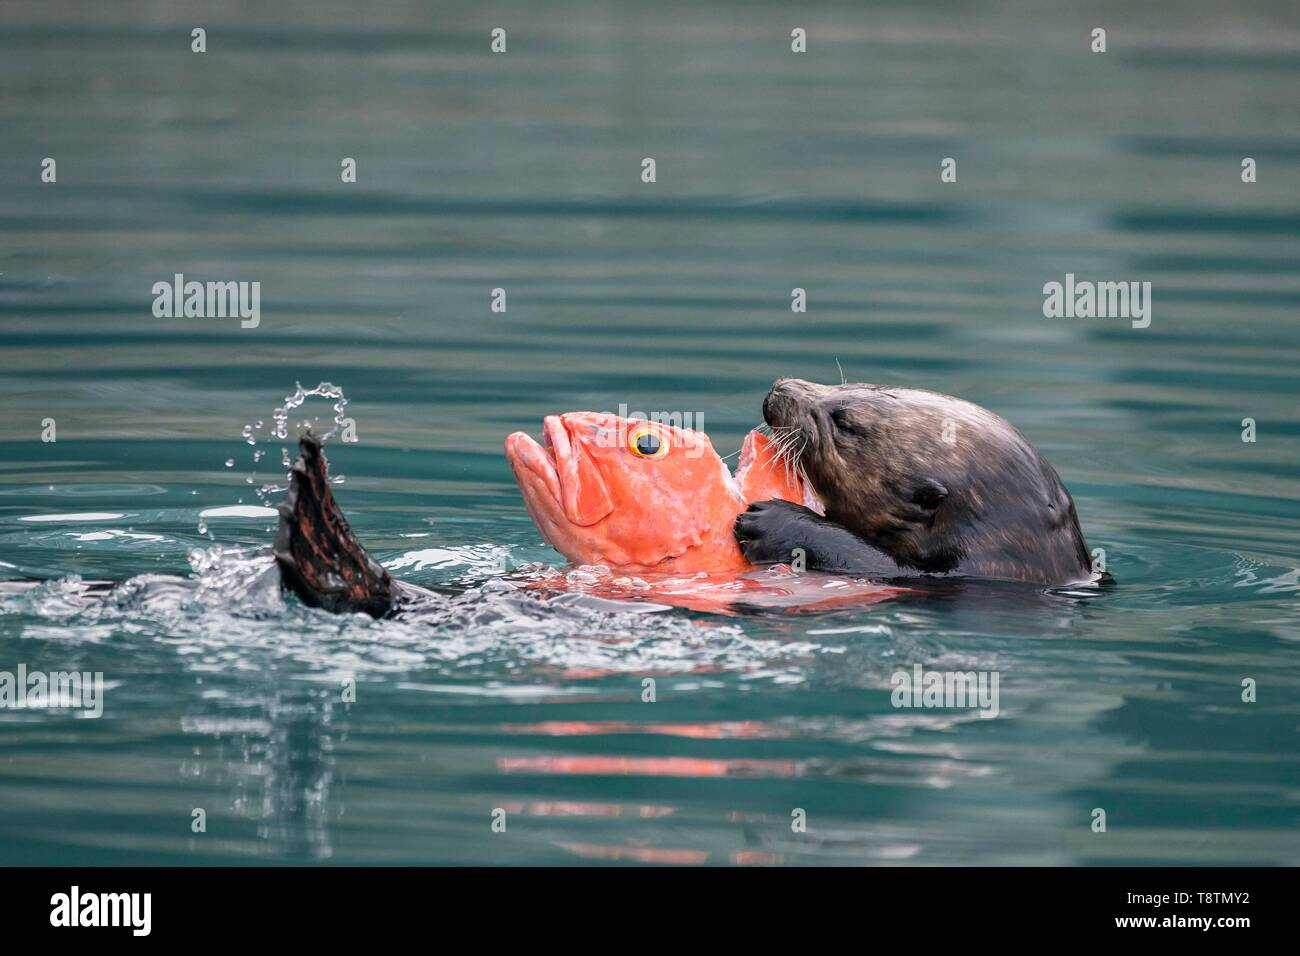 Sea Otter (Enhydra lutris) mangia il pesce catturato in acqua, Seward, Alaska, STATI UNITI D'AMERICA Foto Stock